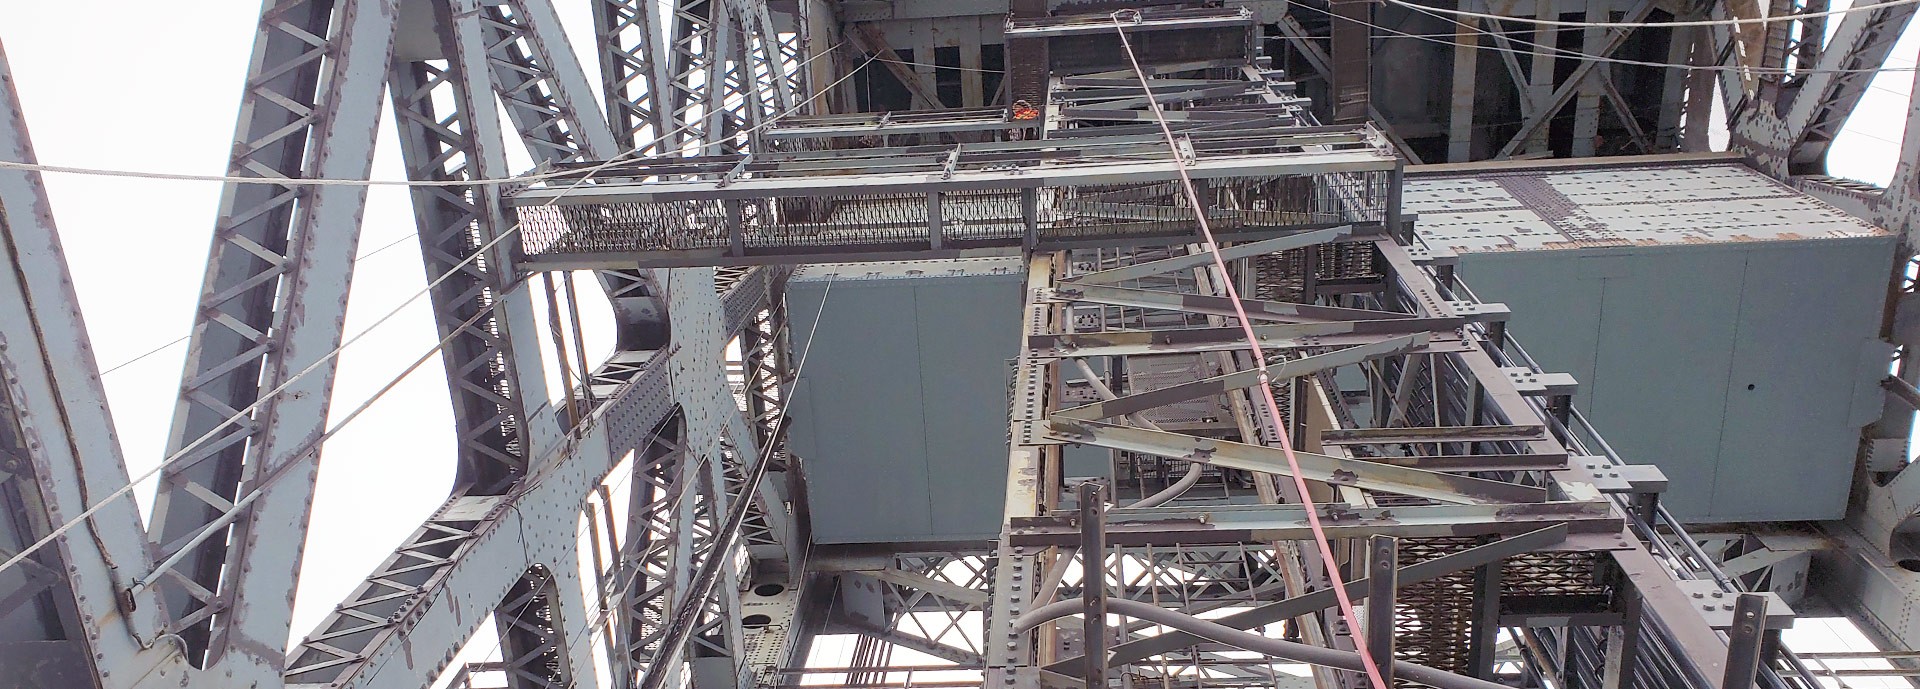 close up of steel girders on bridge elevator shaft